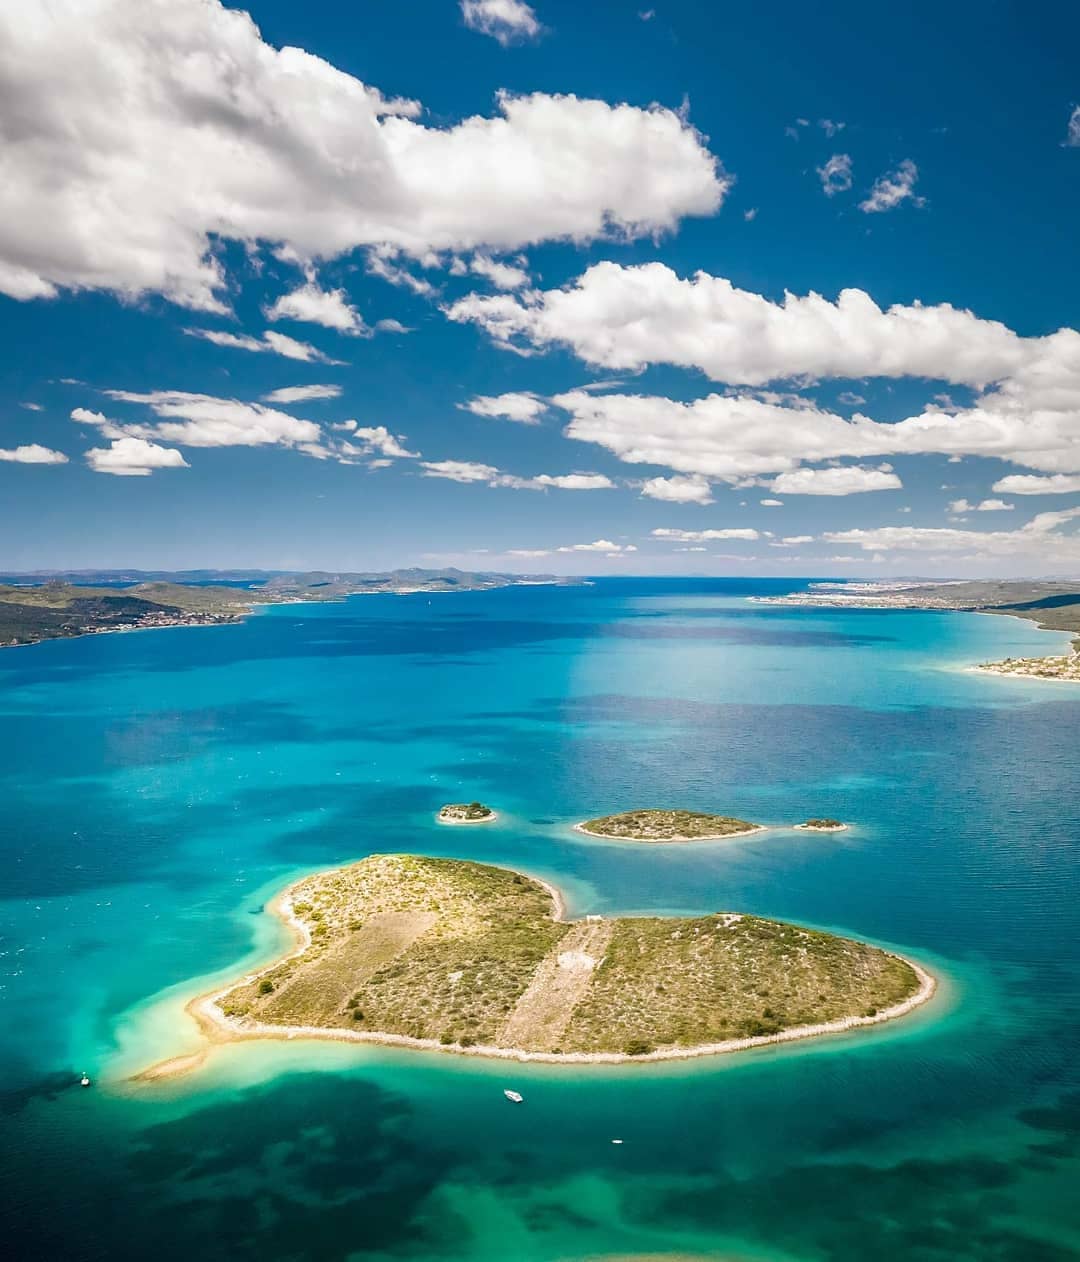 galešnjak island of love heart shaped island zadar archipelago aerial drone